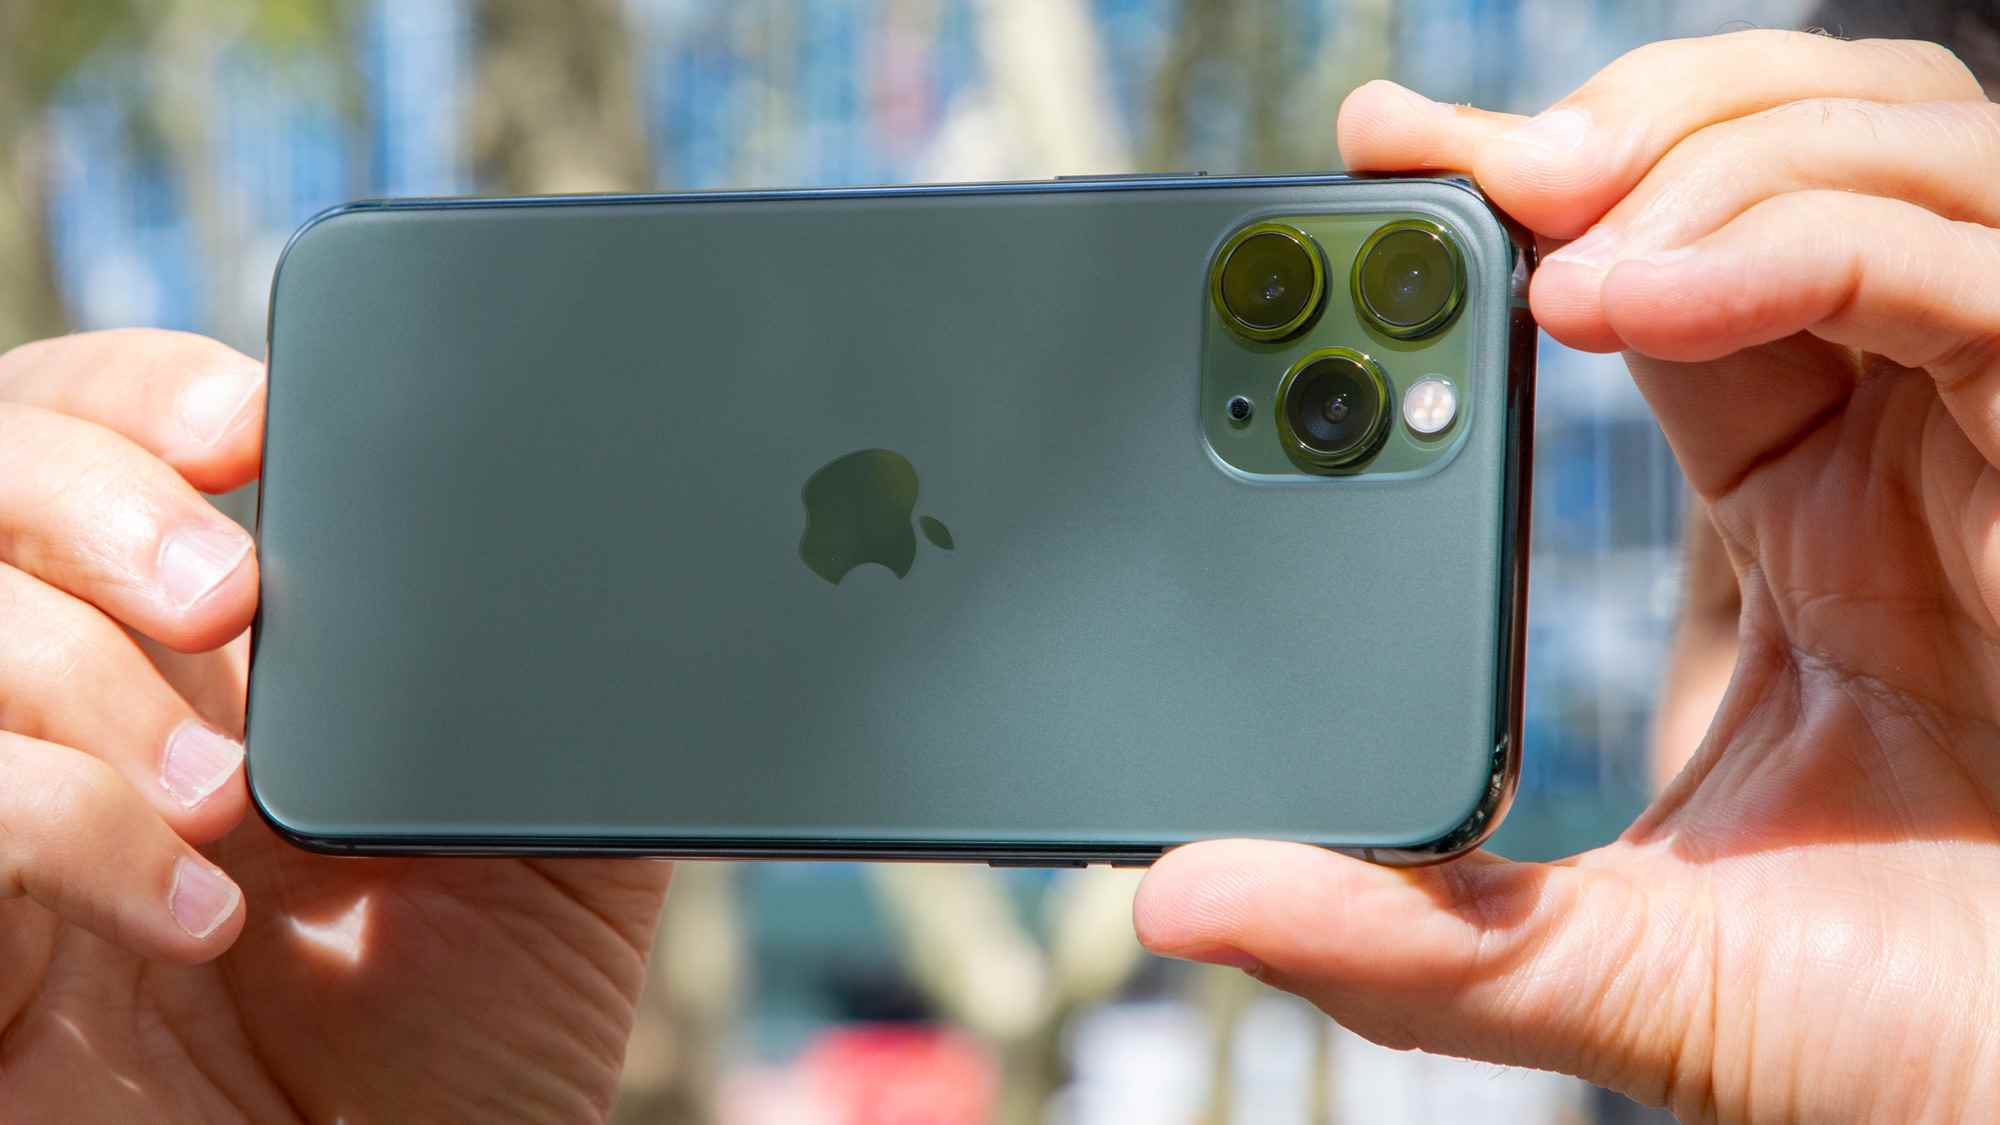 En iyi kameralı telefon: iPhone 11 Pro Max